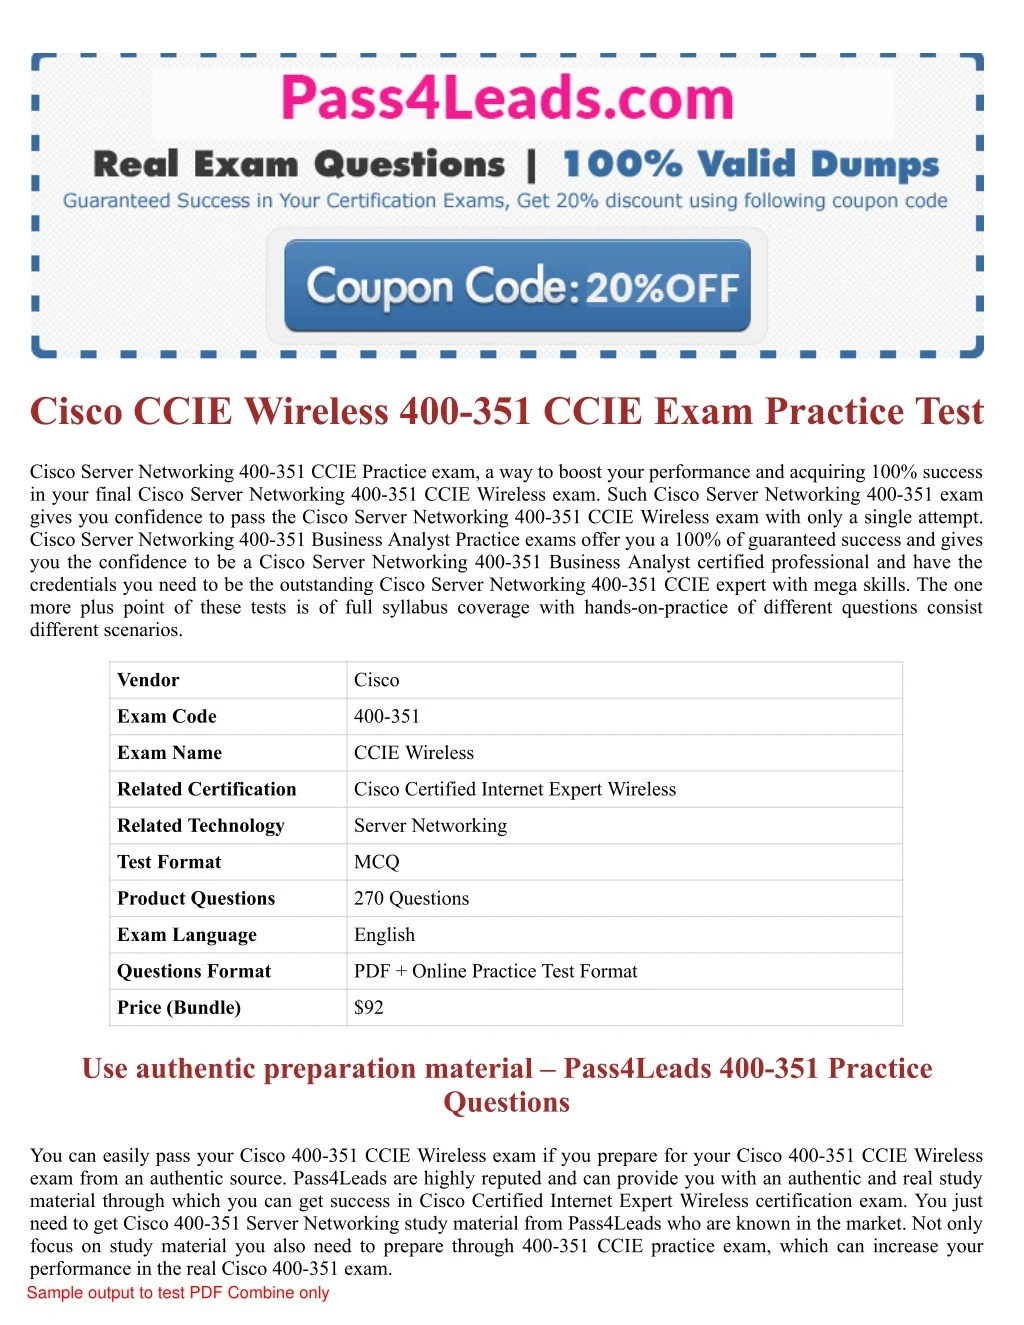 cisco ccie wireless 400 351 ccie exam practice